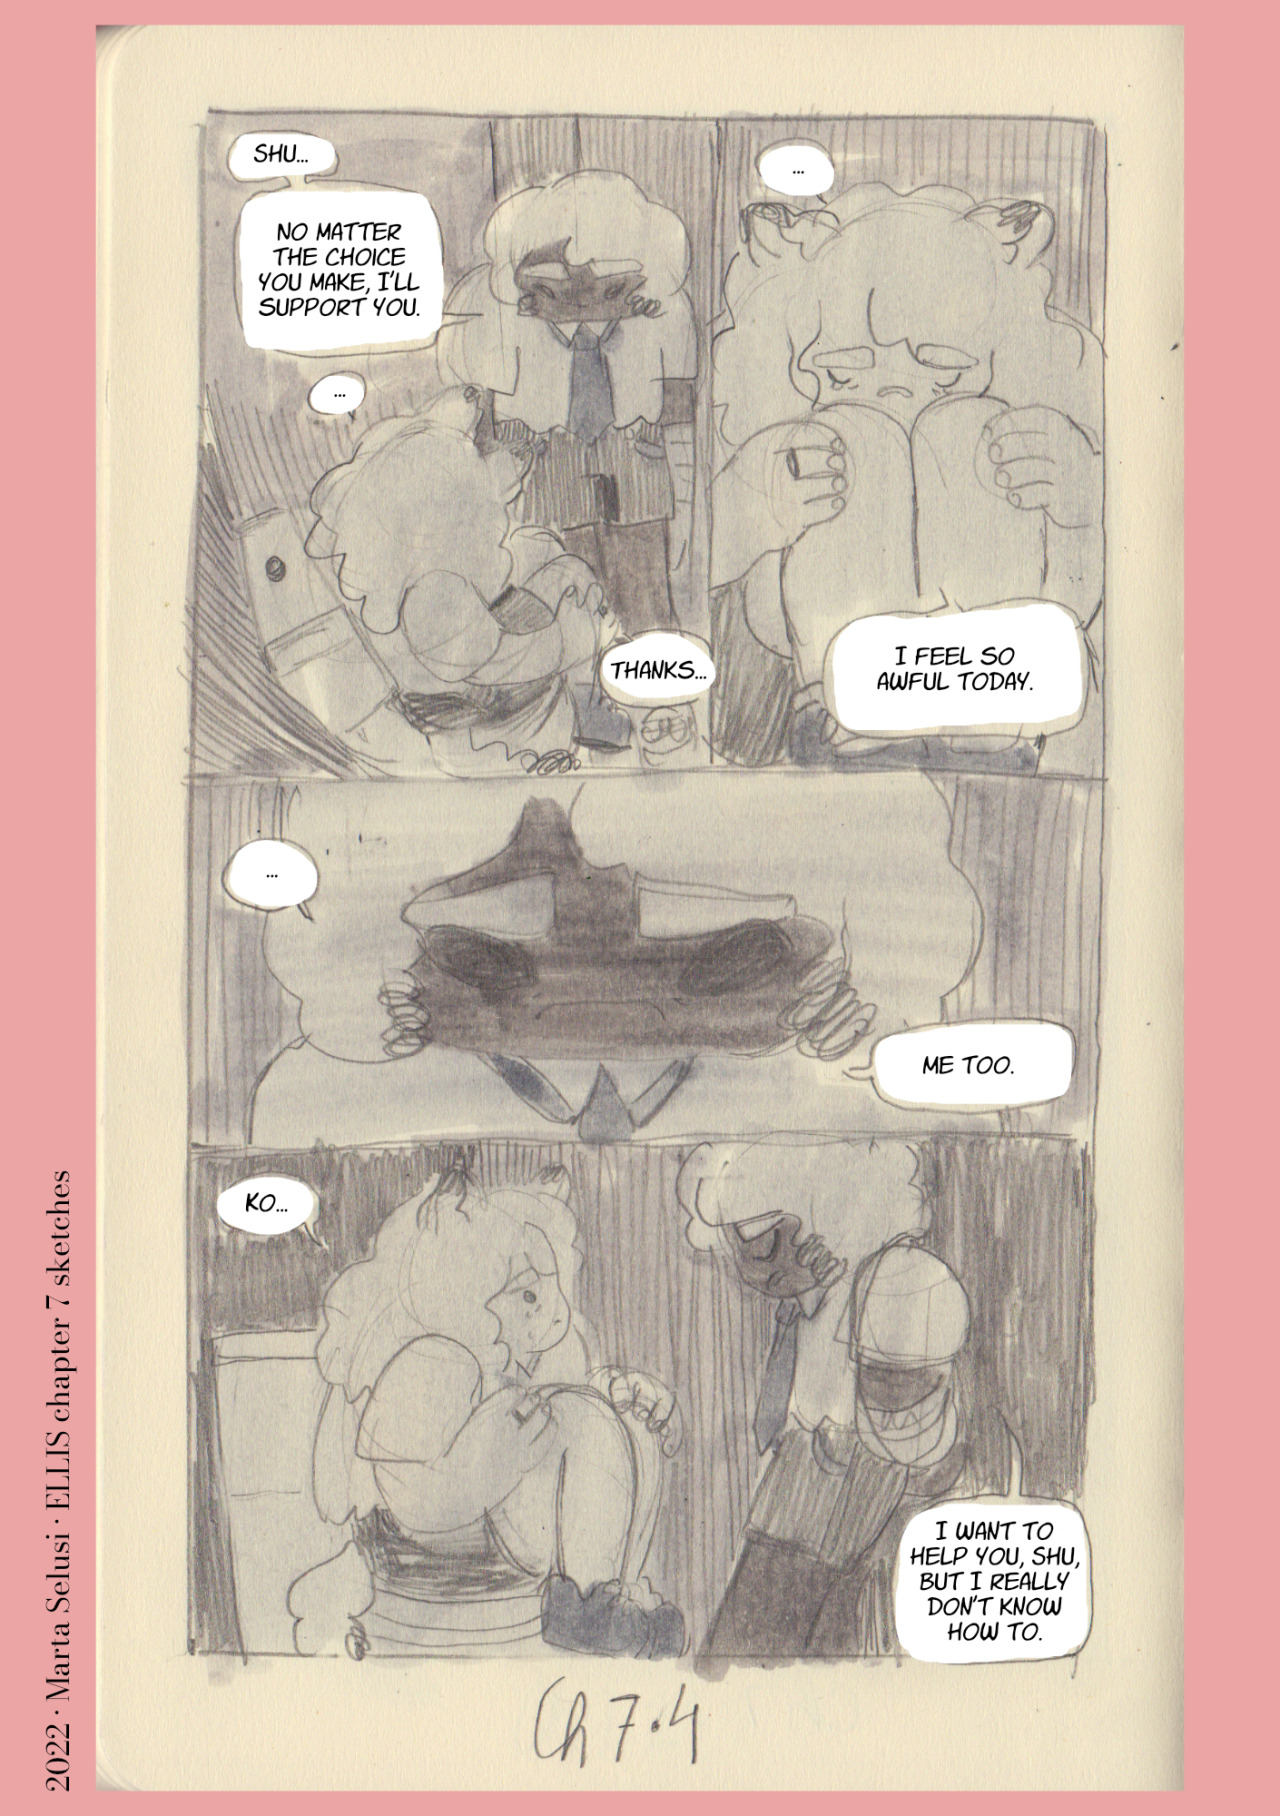 ELLIS chapter 7 page 4 sketch—[PORTFOLIO] [PATREON] [COMMISSIONSandSHOP] #Marta Selusi#ELLIS#sketchbook#my art#Patreon#comic sketch #mental health awareness